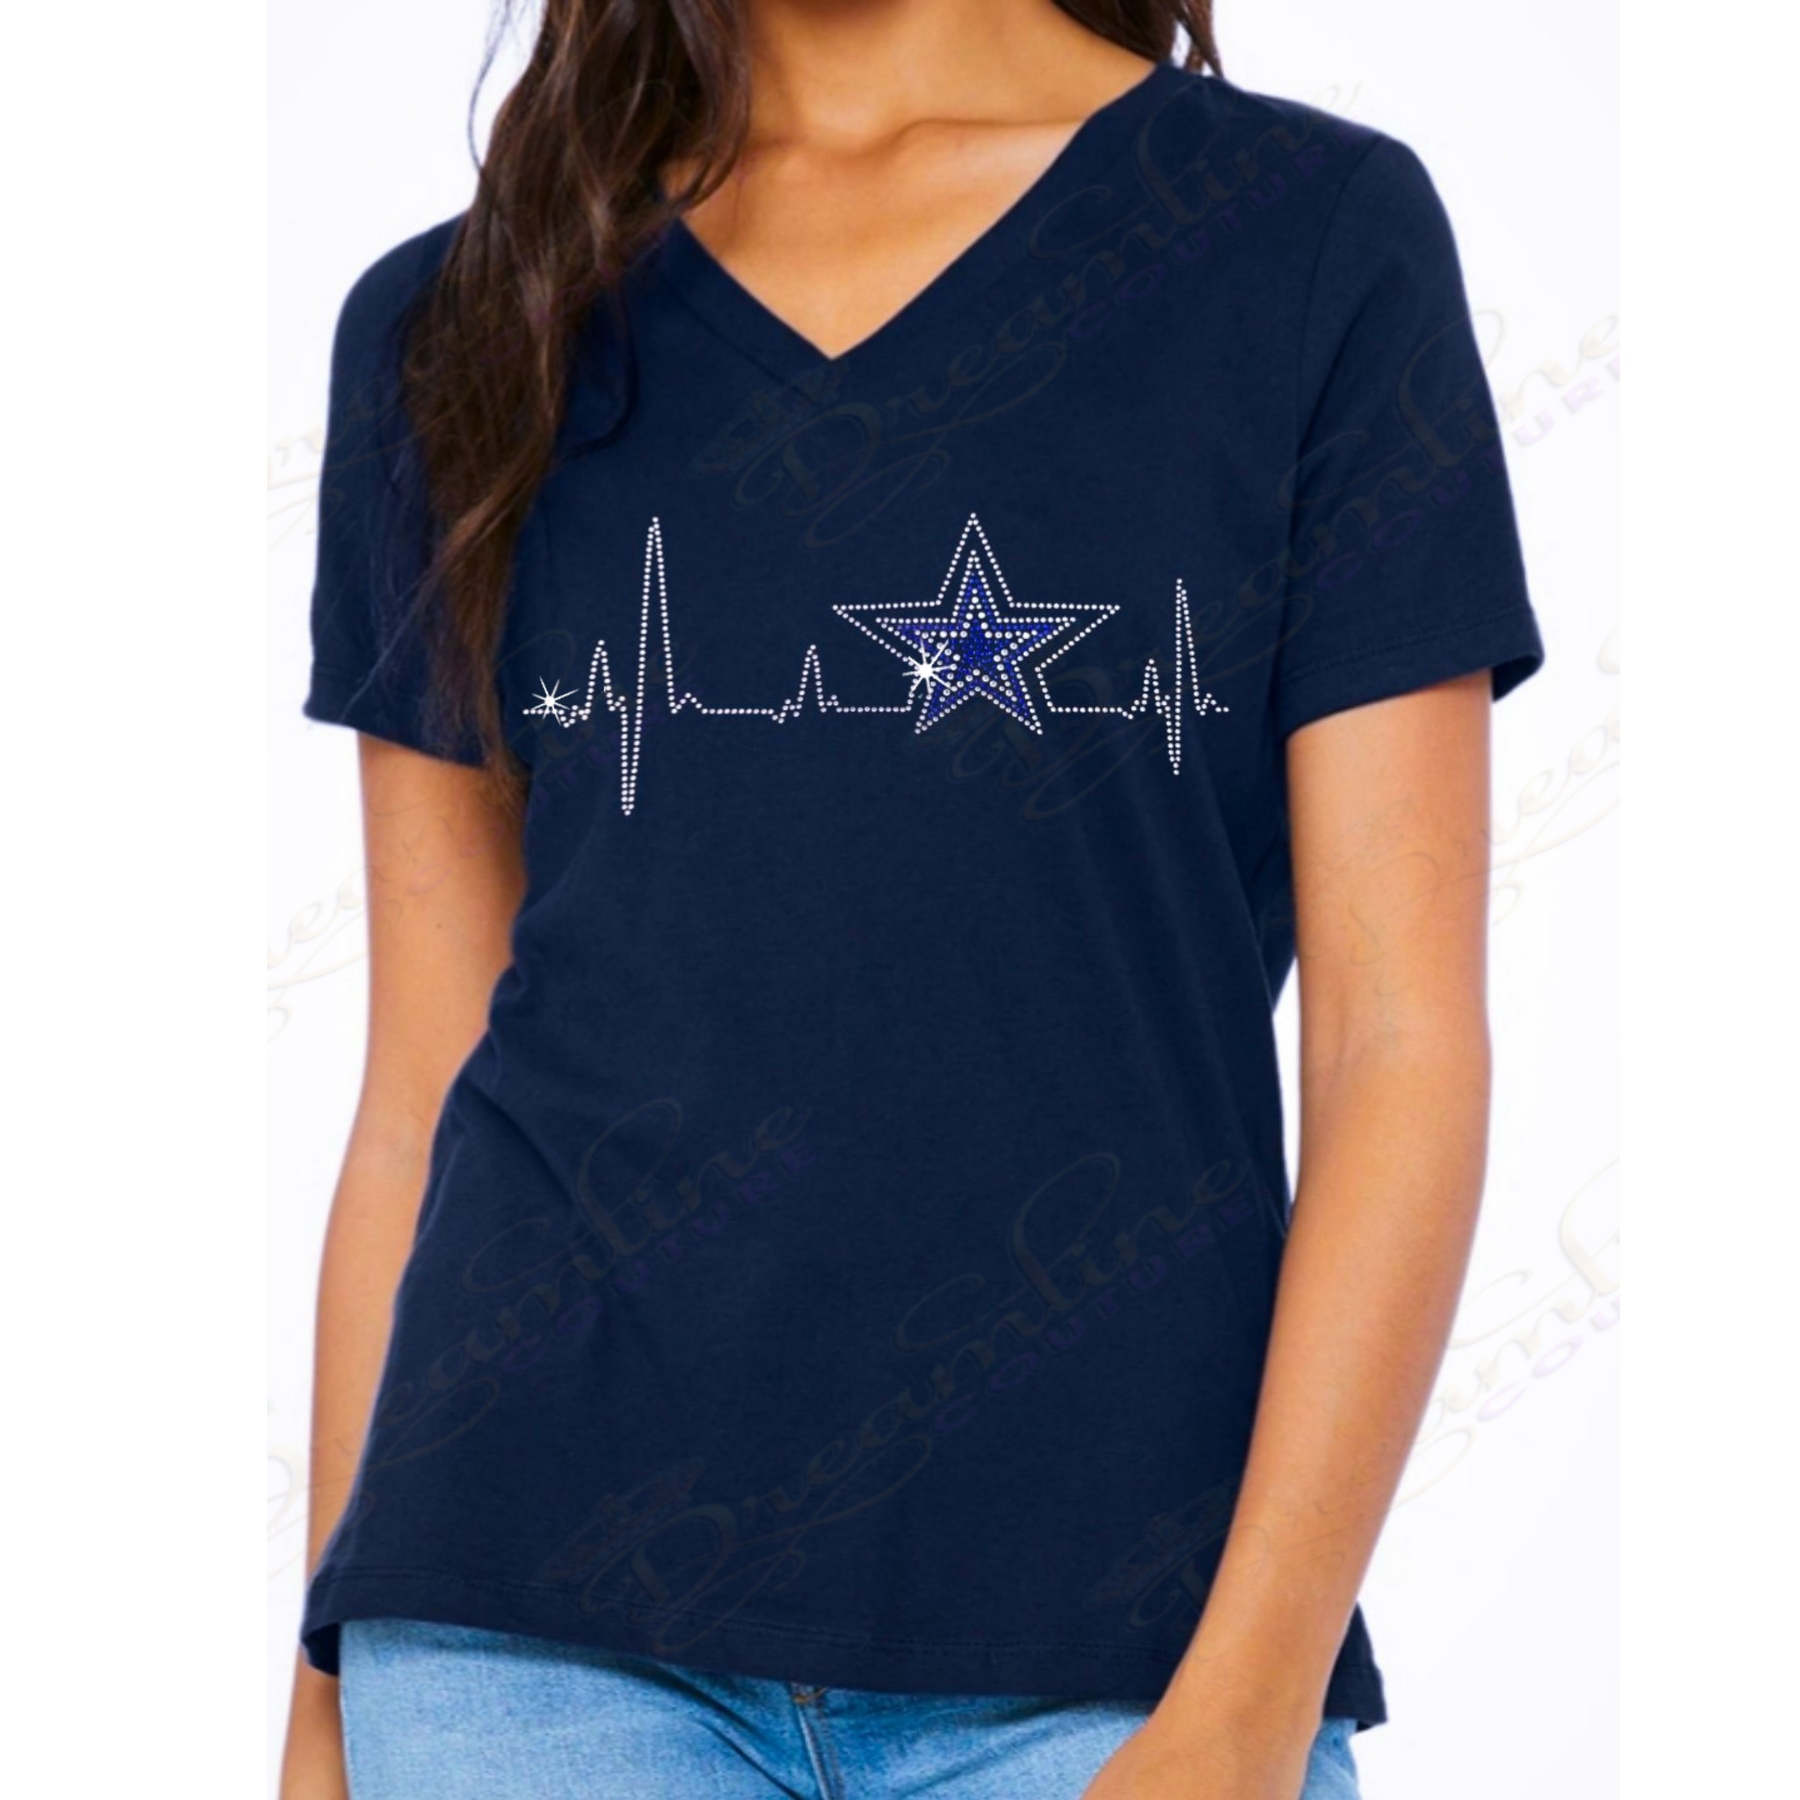 Buy Bling Dallas Cowboys Shirt For Free Shipping CUSTOM XMAS PRODUCT COMPANY